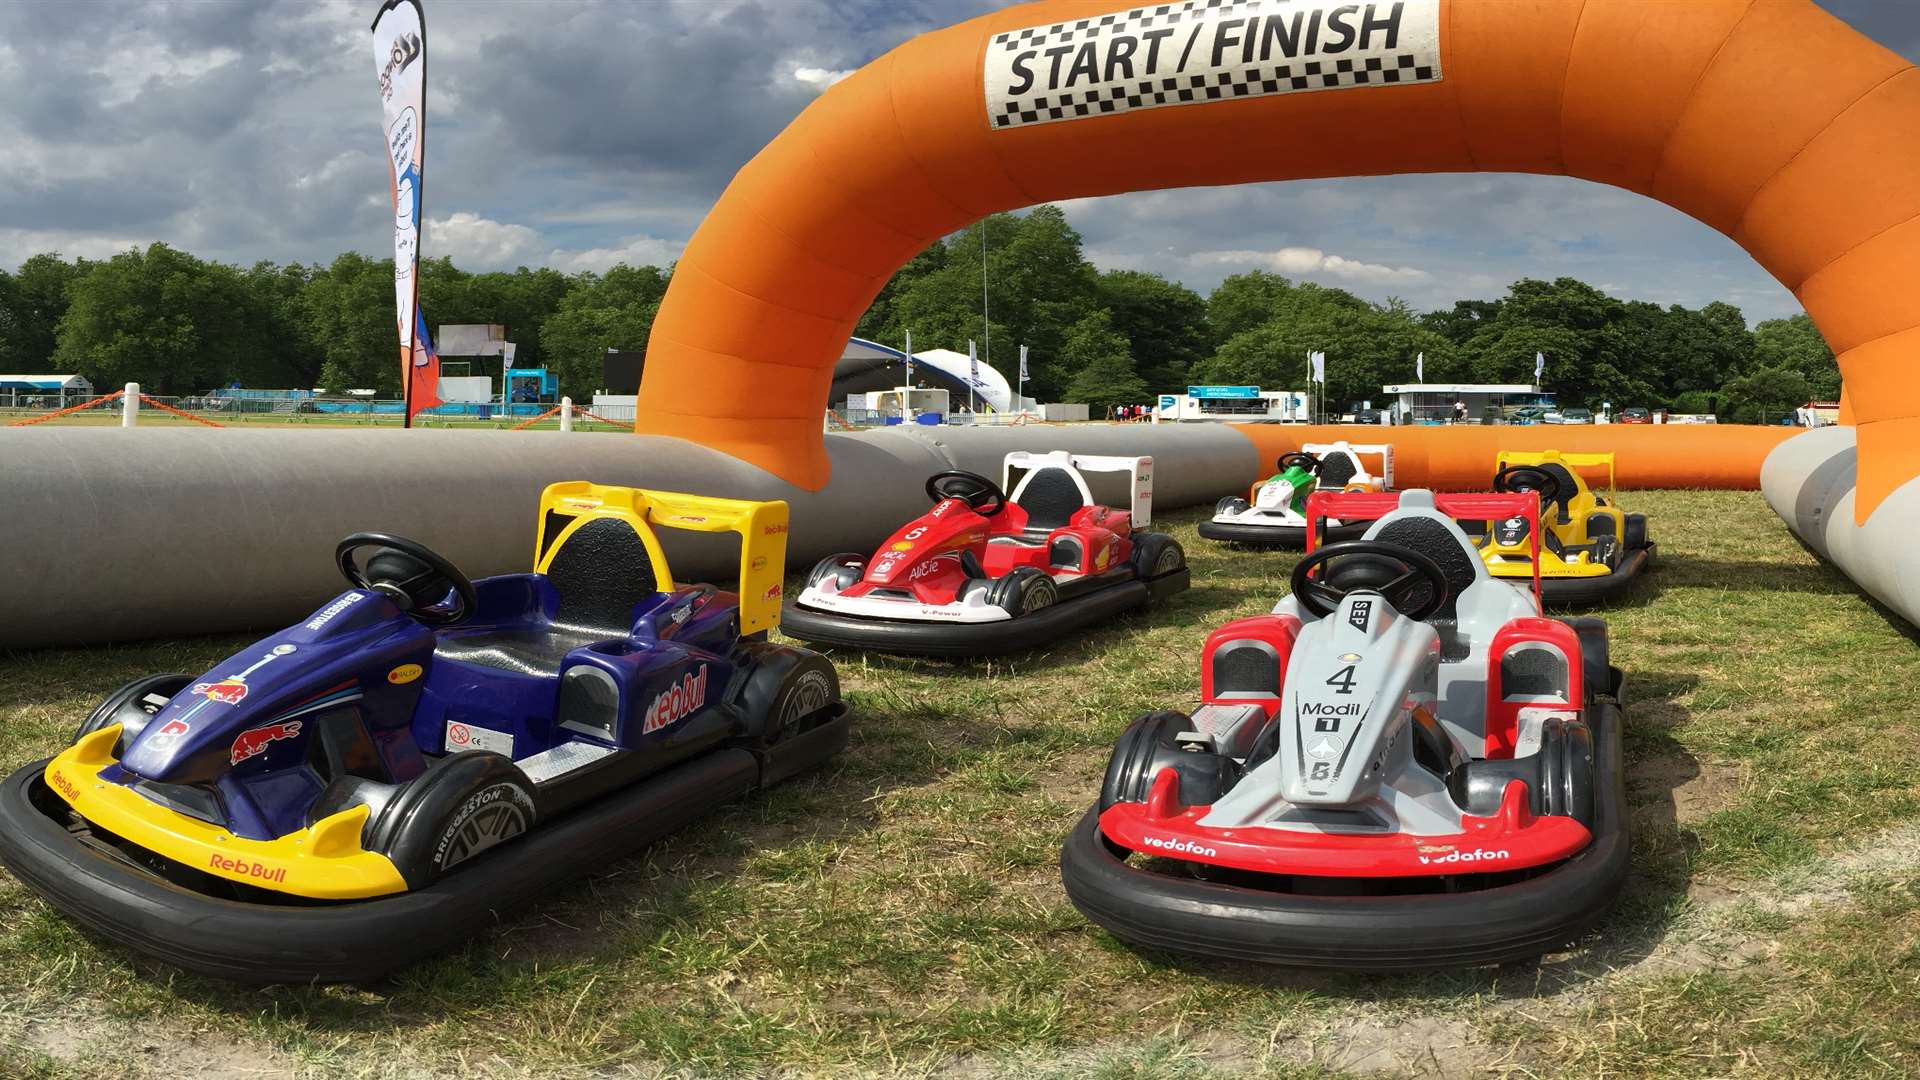 Bluewater is hosting a children's motorsport event